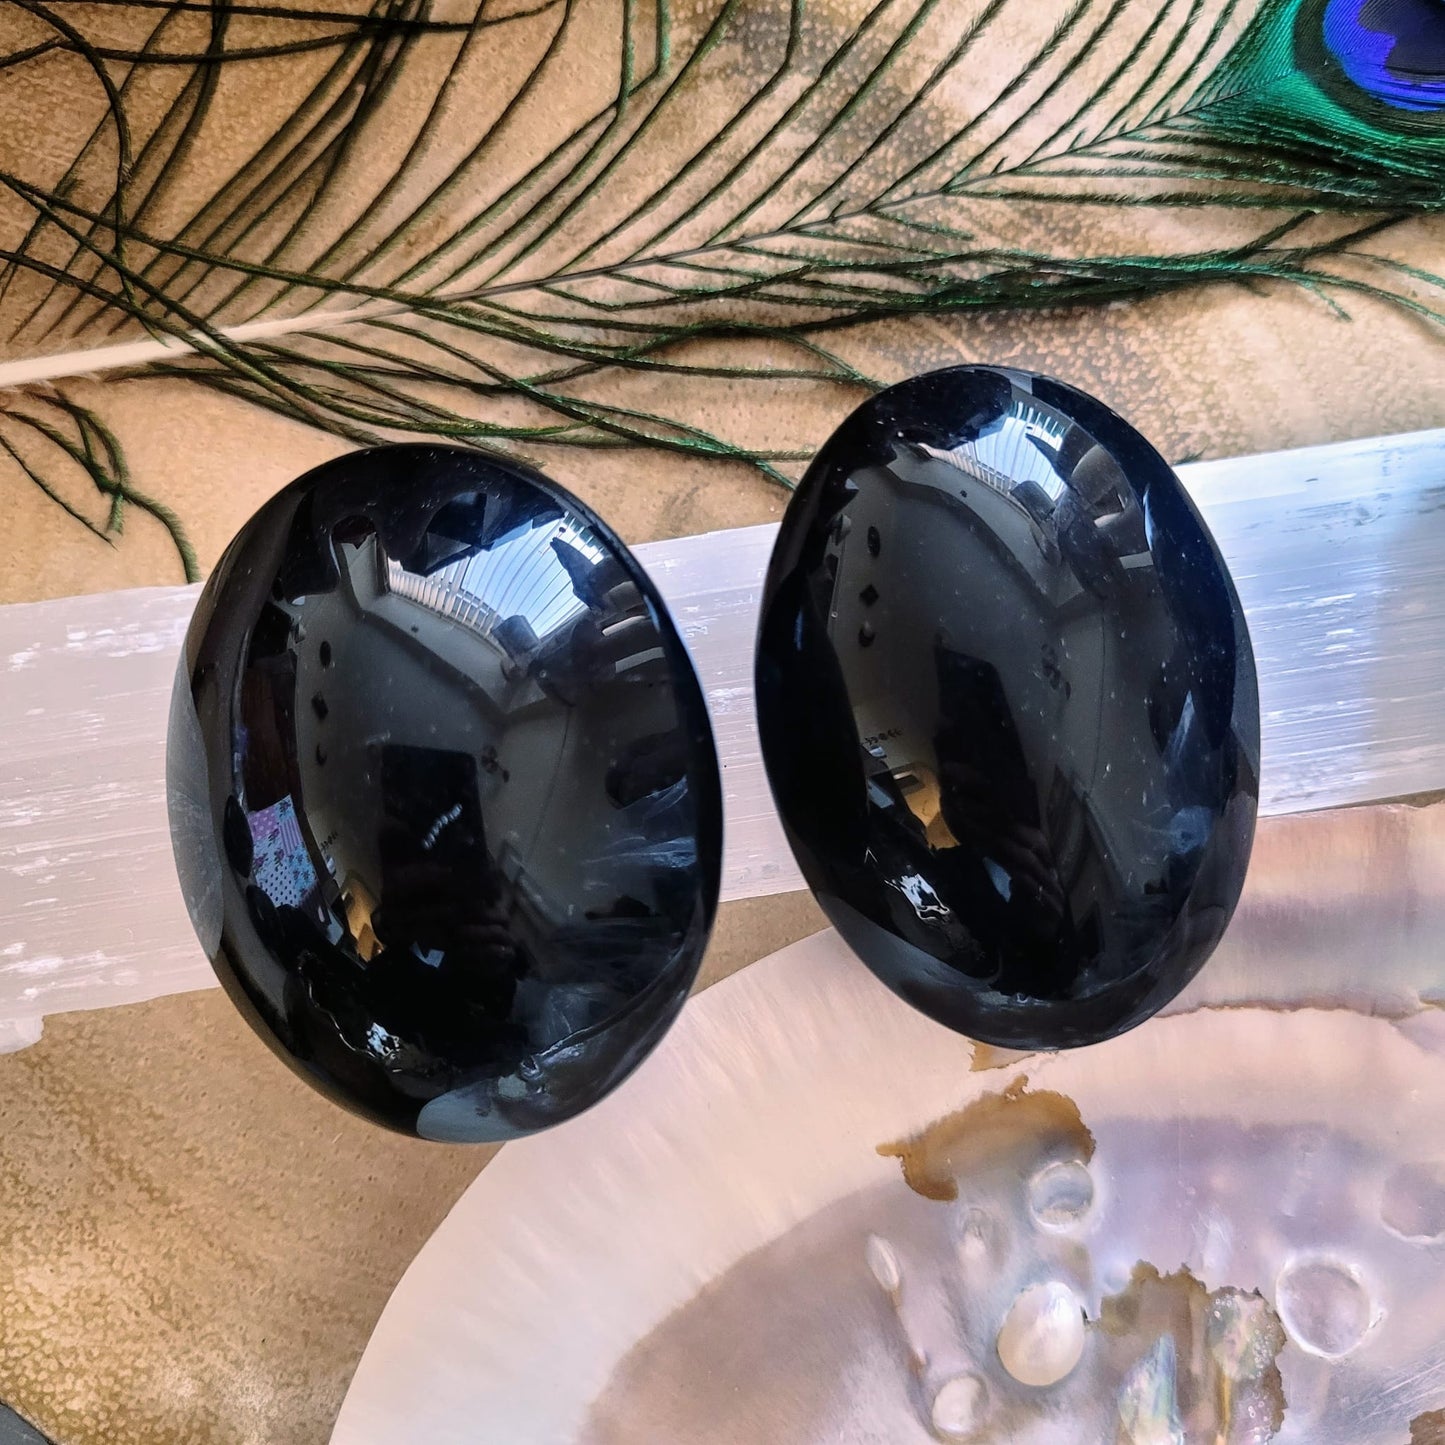 Black Obsidian Palm Stones 5-6cm